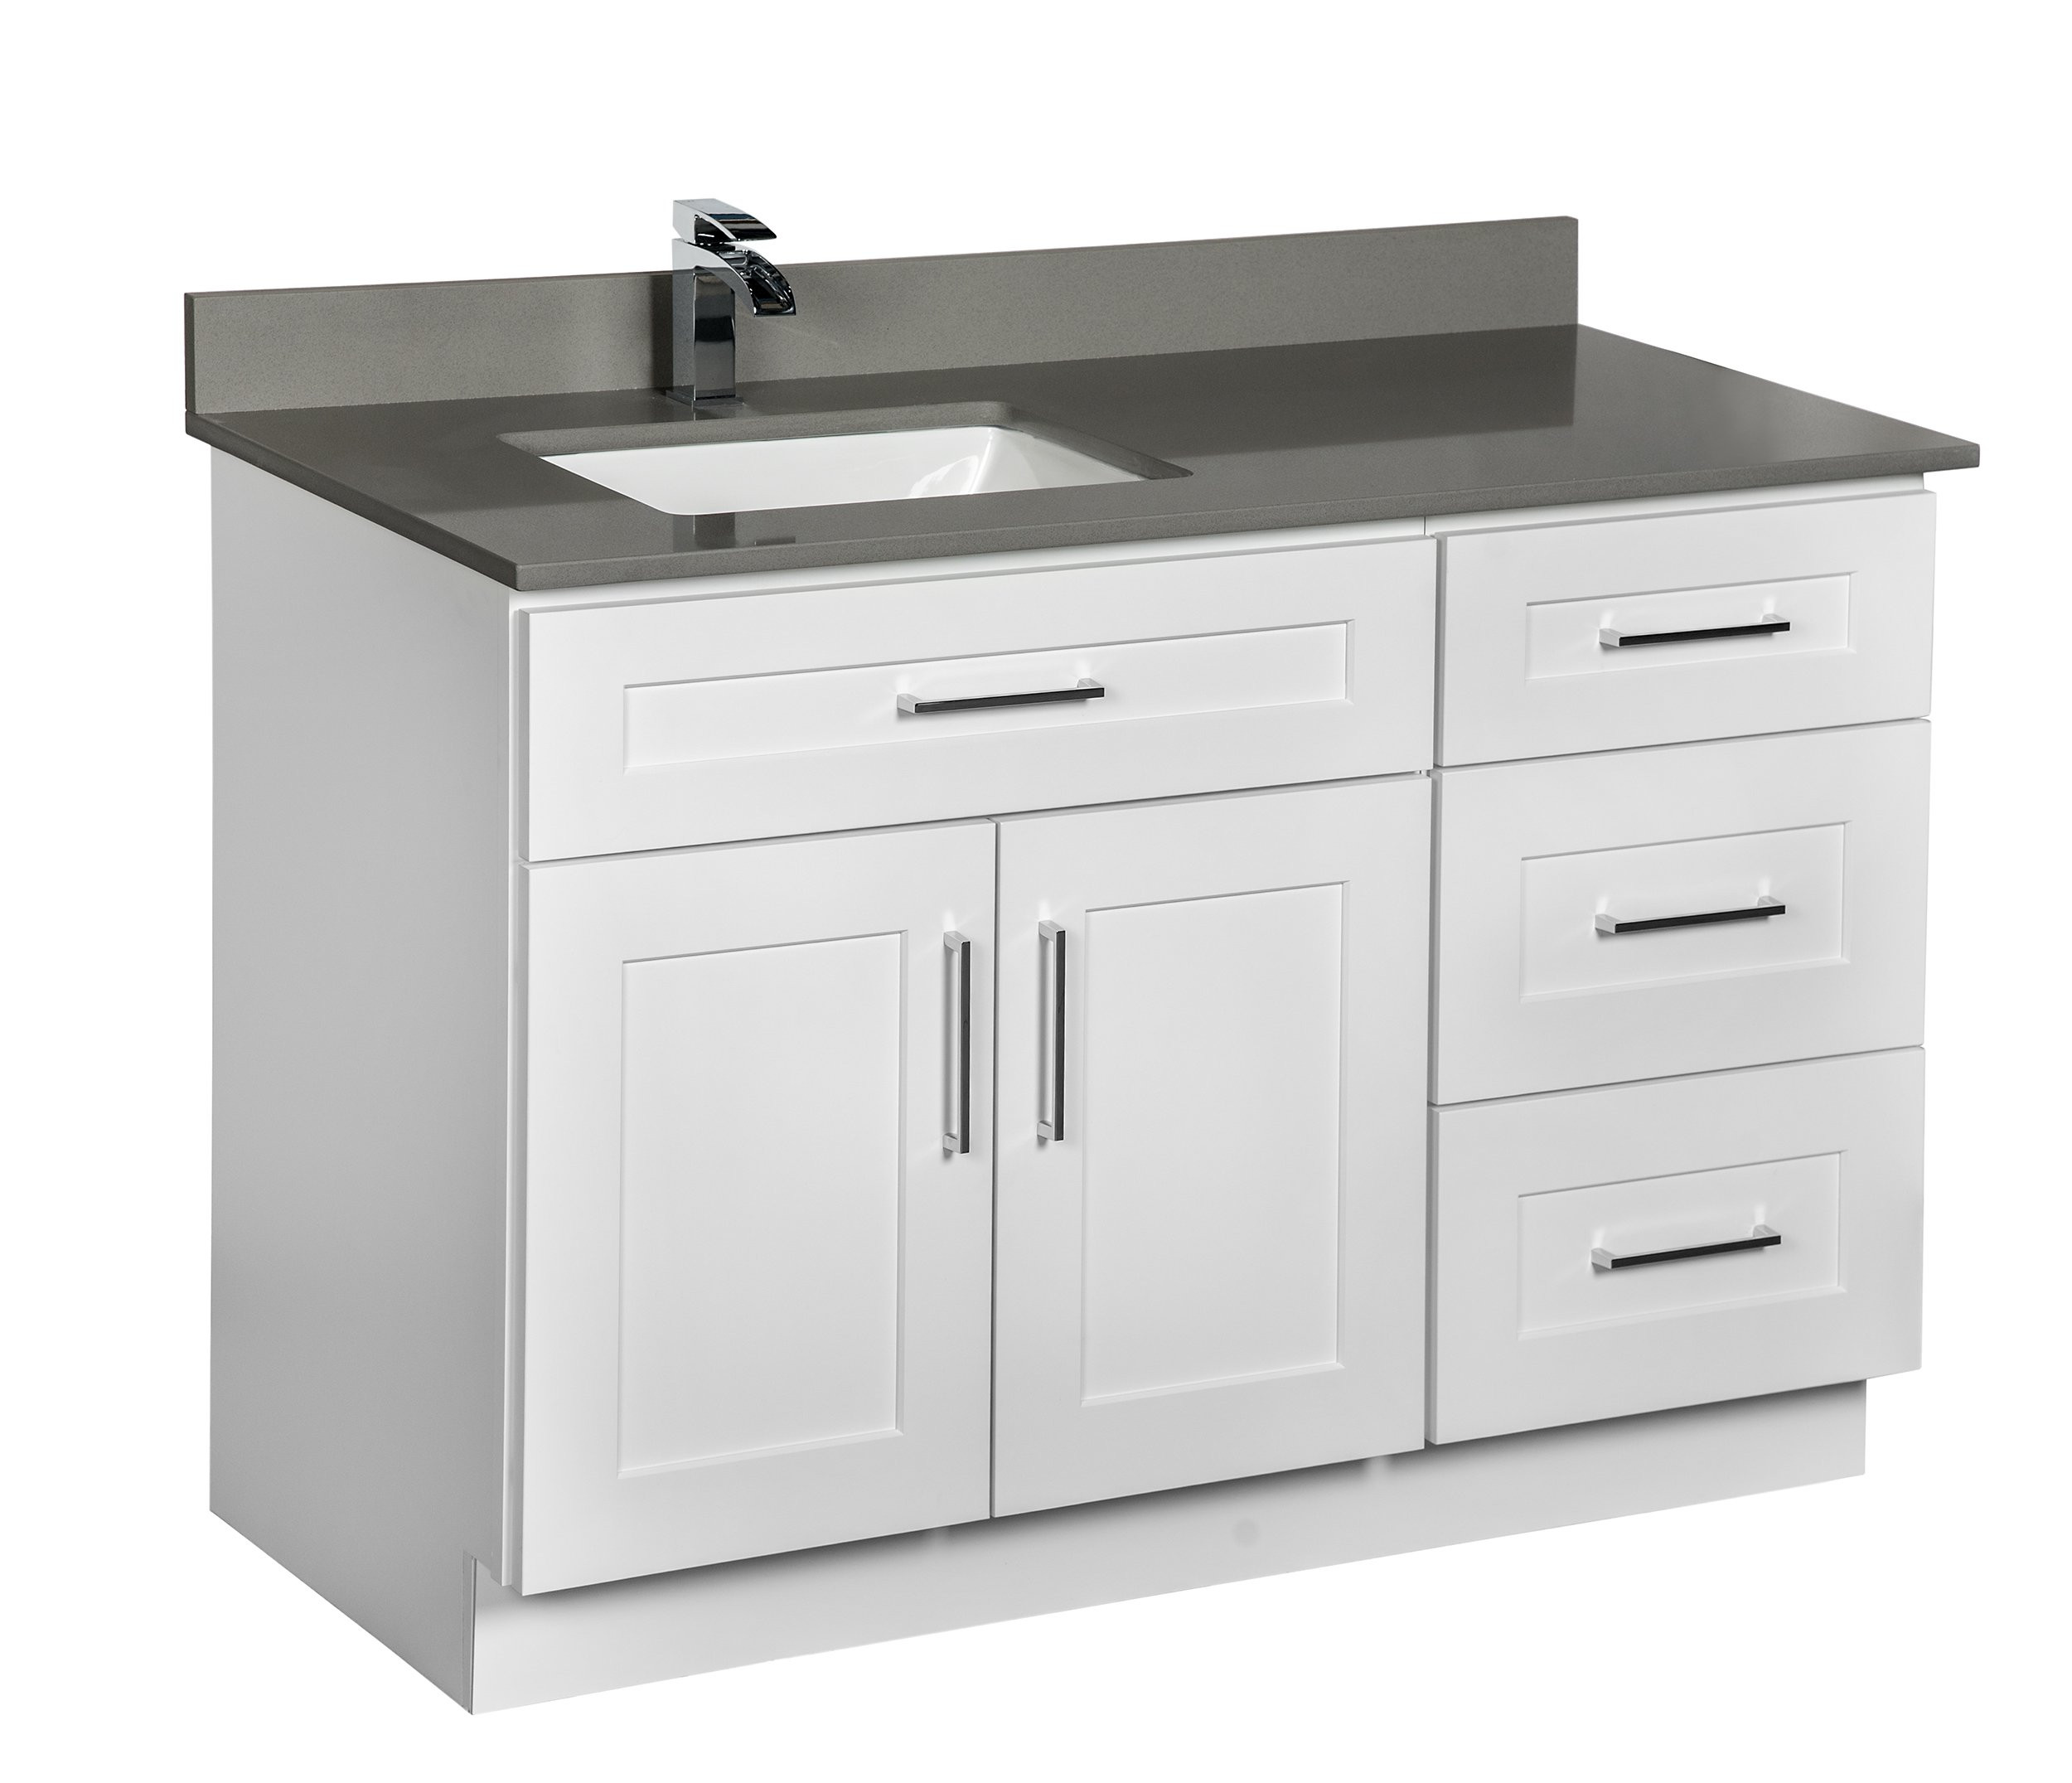 Offset Drain Bathroom Sink
 Bathroom Cabinet Configurations fset Sink Cabinet